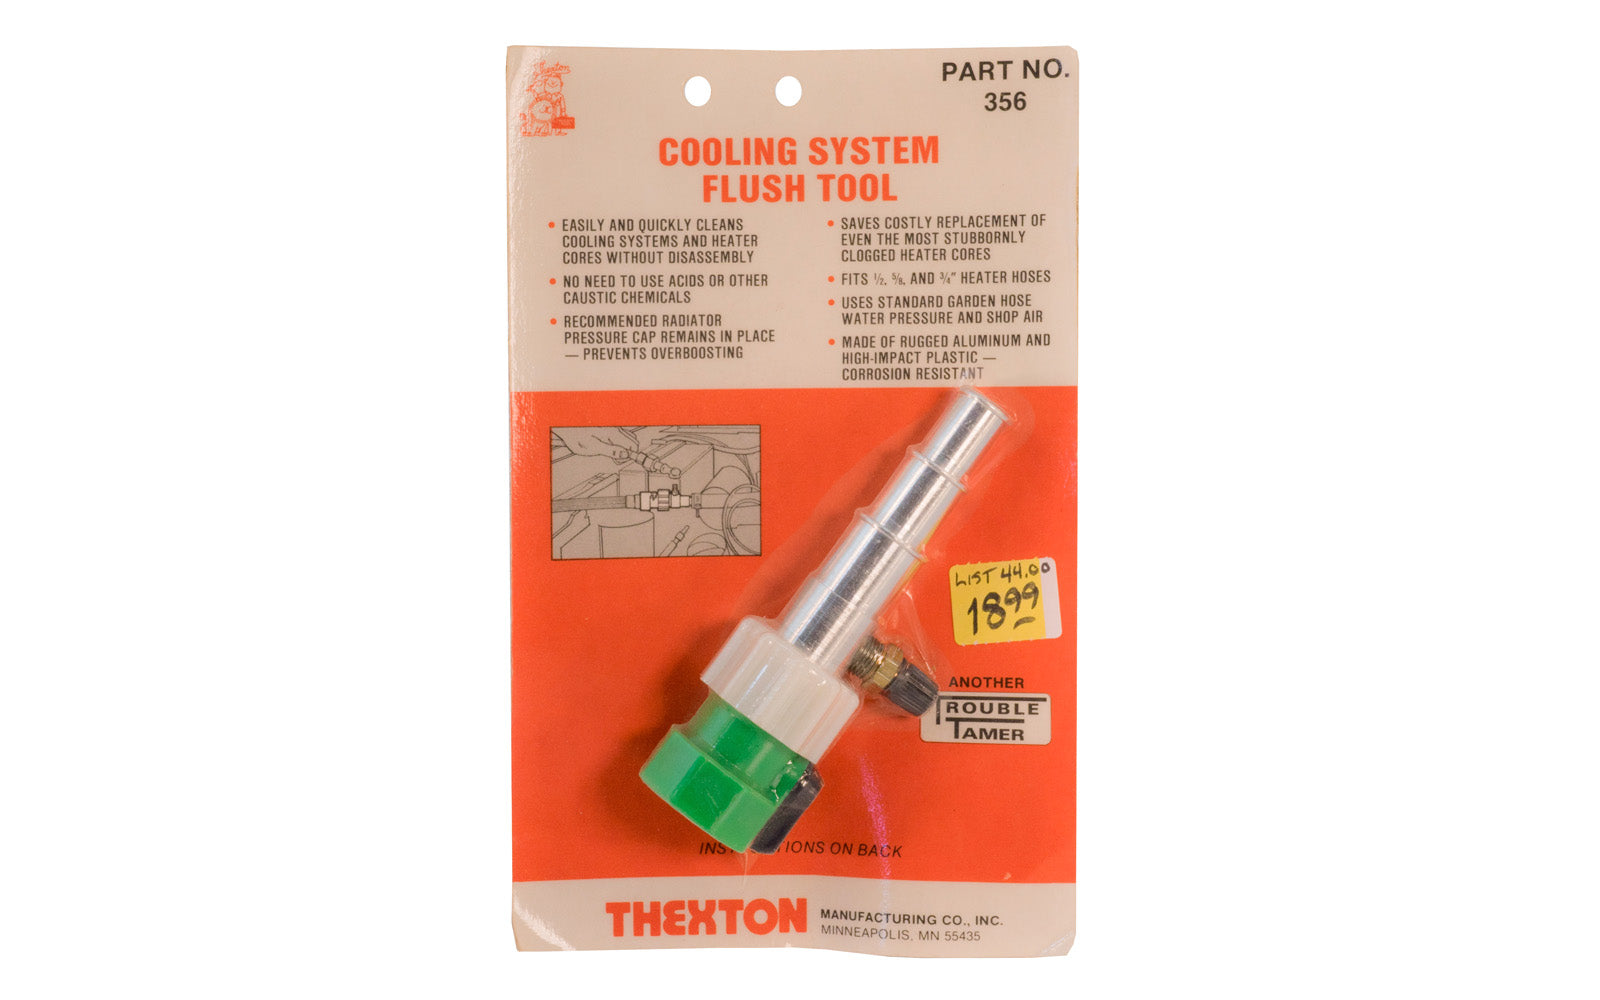 Thexton Cooling System Flush Tool. Part No. 356. Thexton Manufacturing Company, Minneapolis MINN.